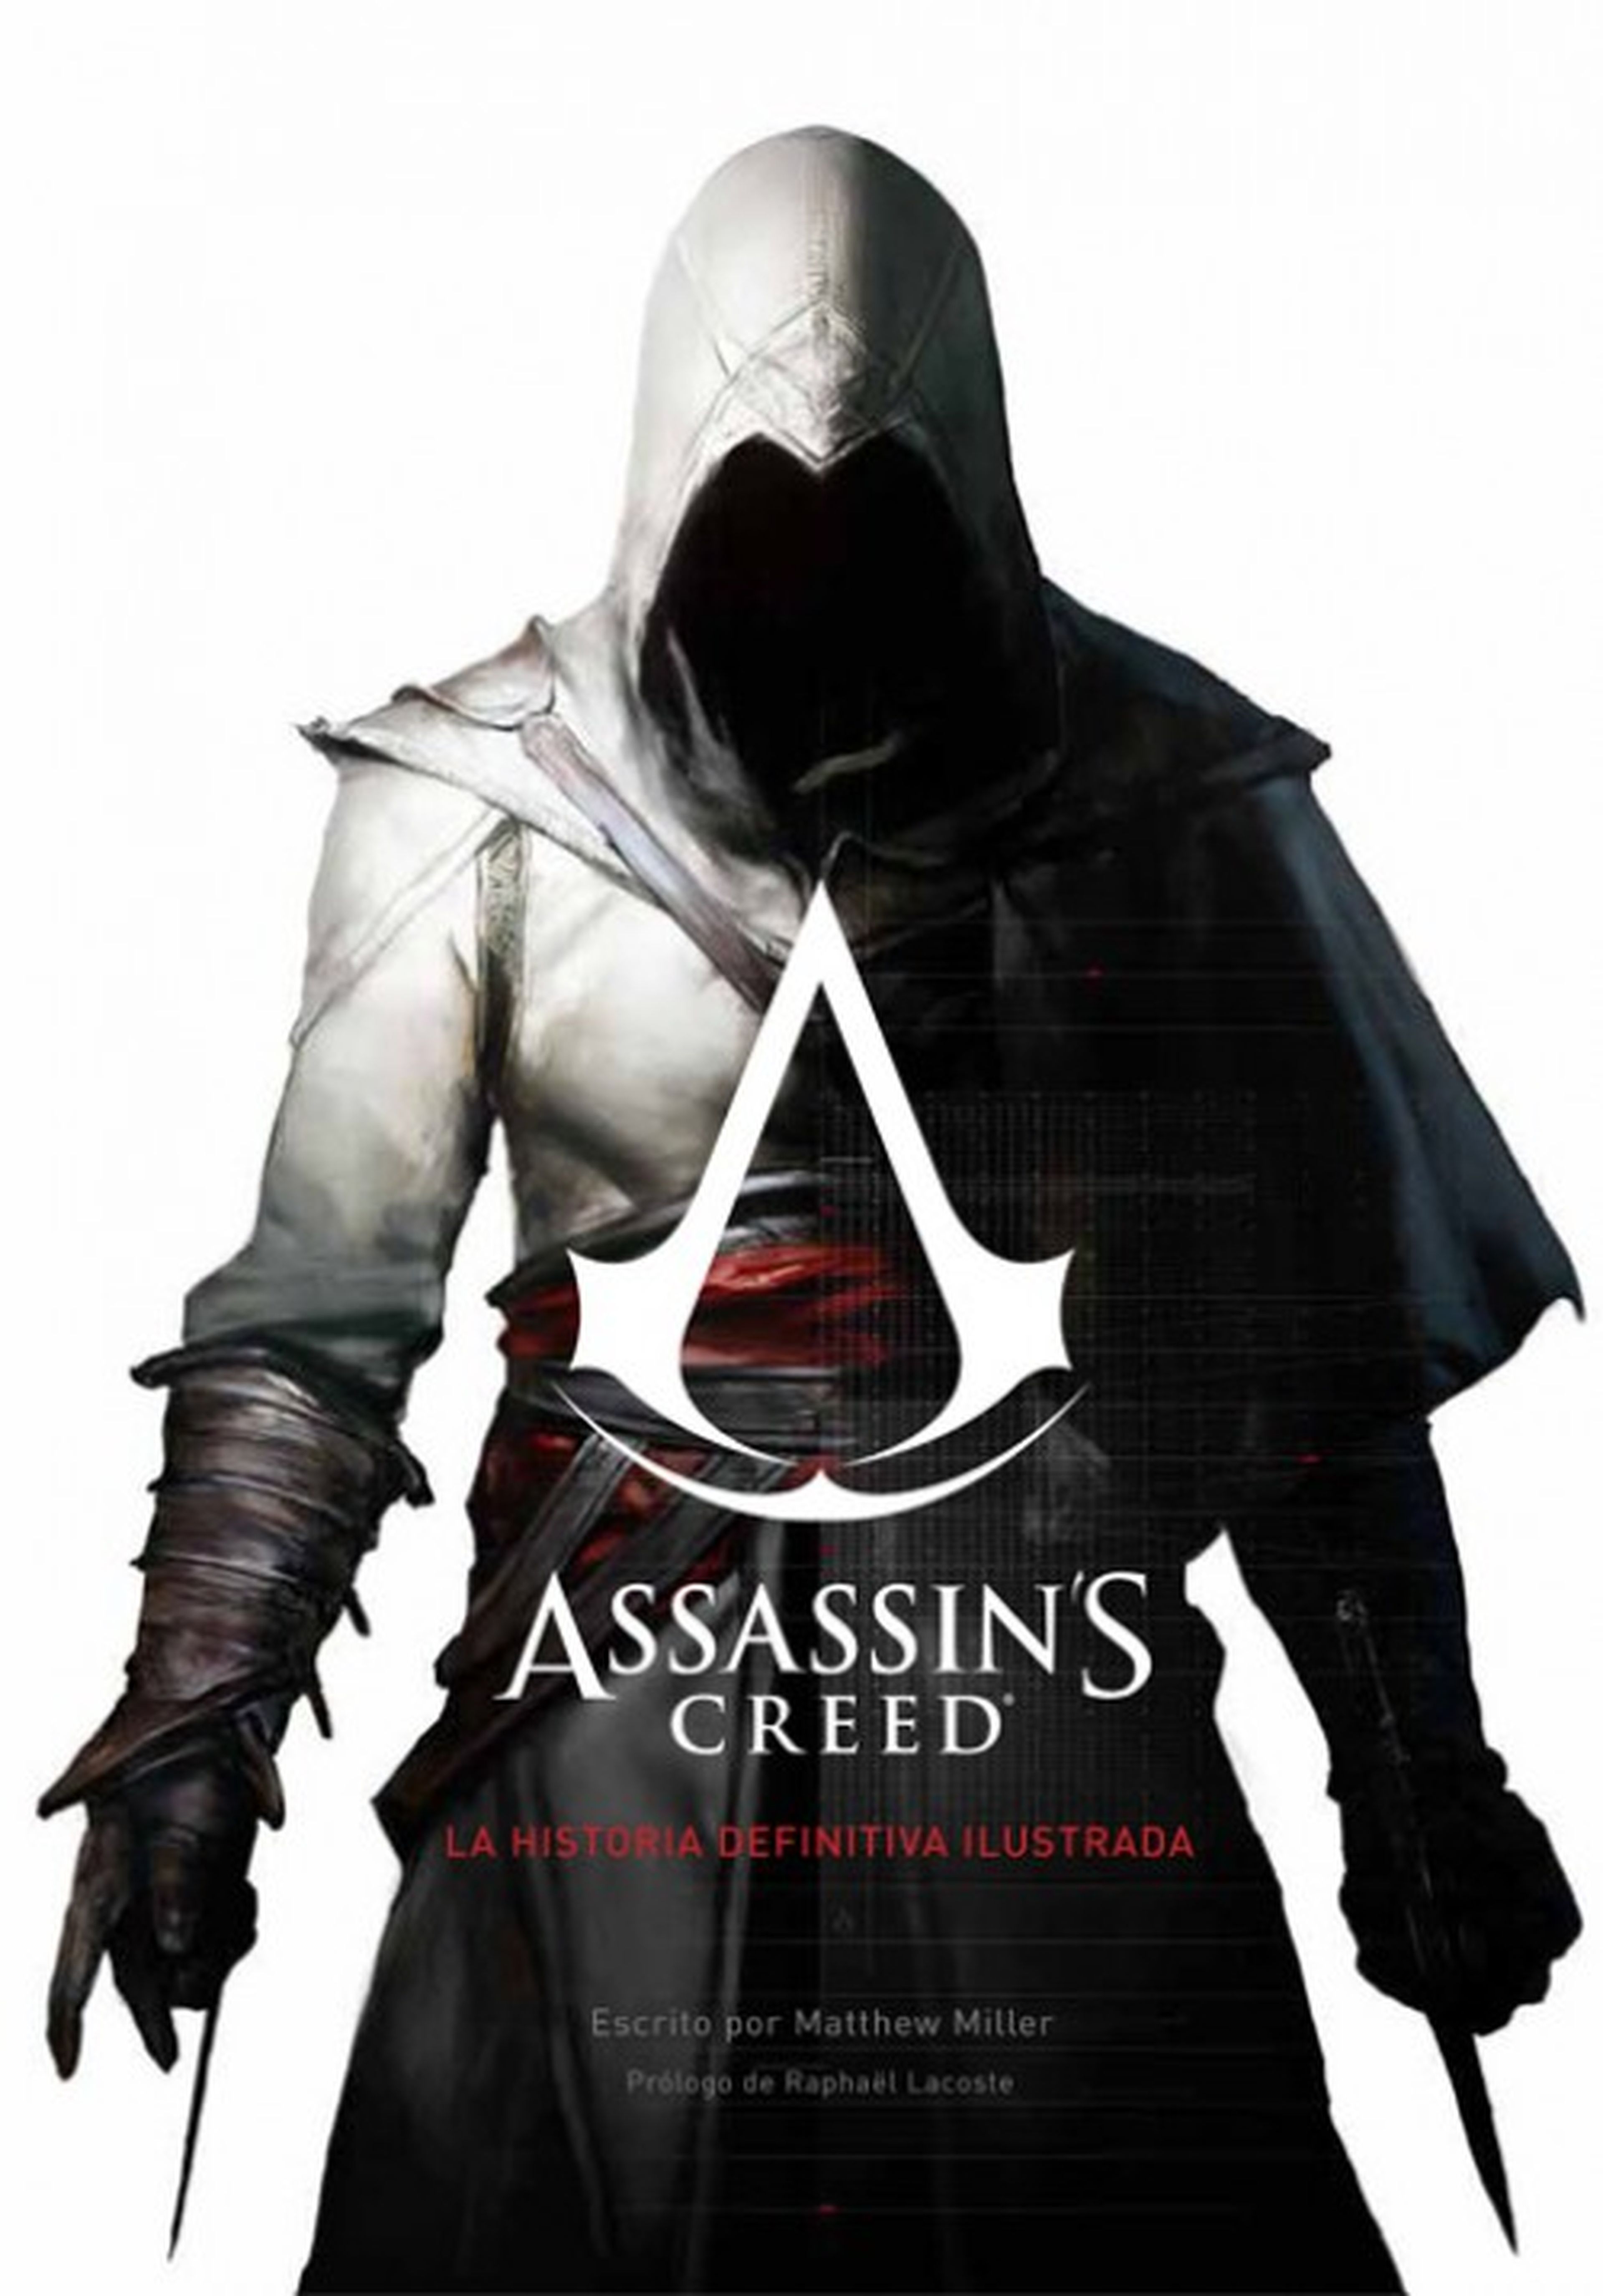 Concurso de dibujo Assassin's Creed: ¡Gana el artbook definitivo!